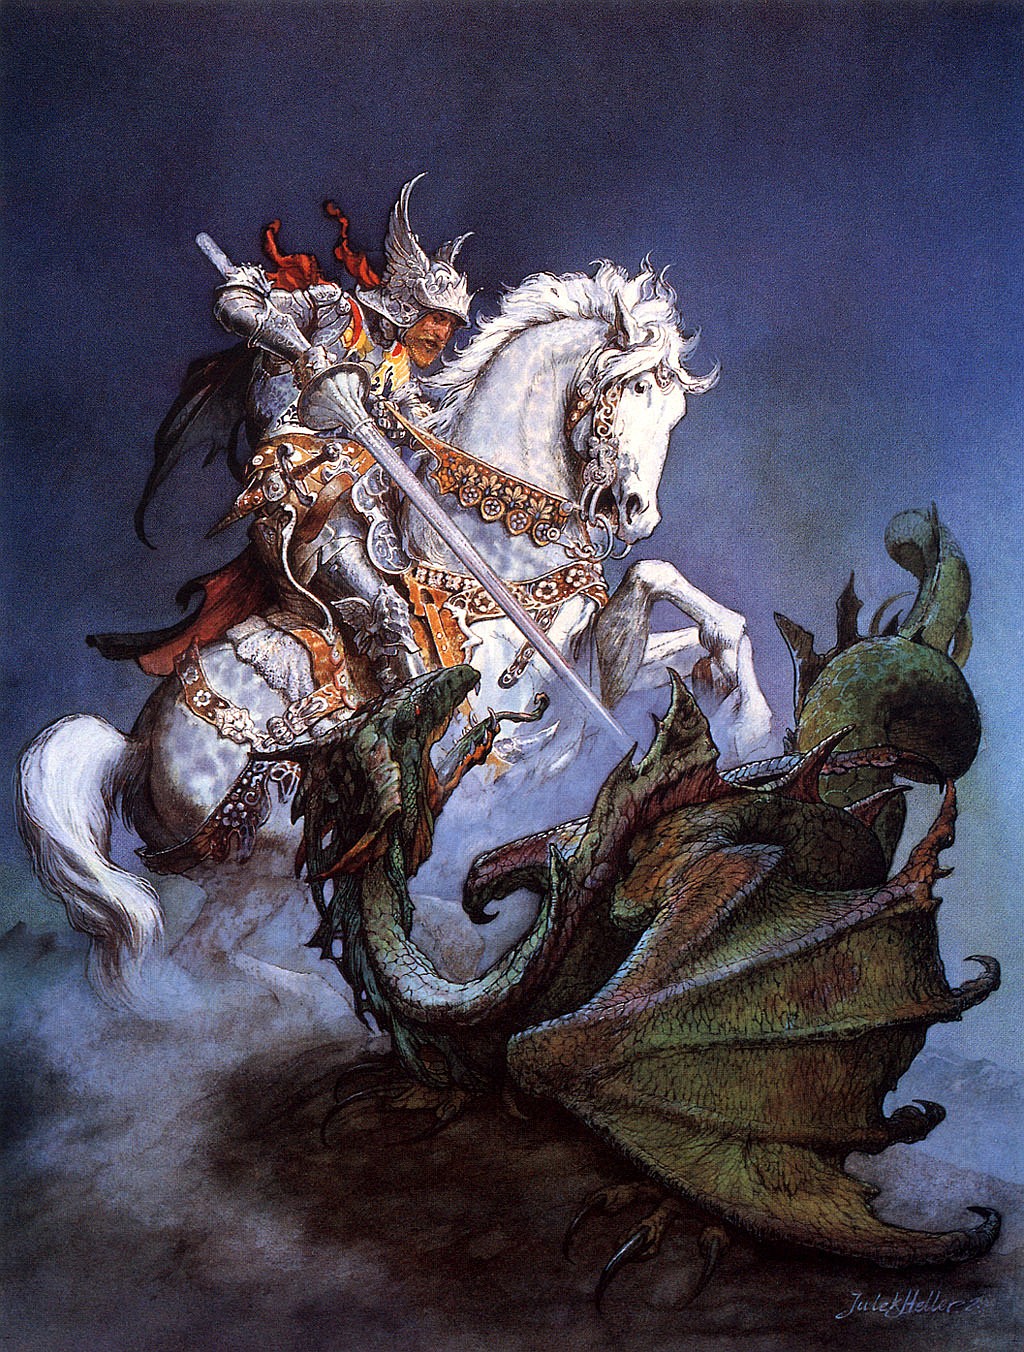 TUMBLR.COM 
 Julek Heller painting of St. George slaying the dragon.